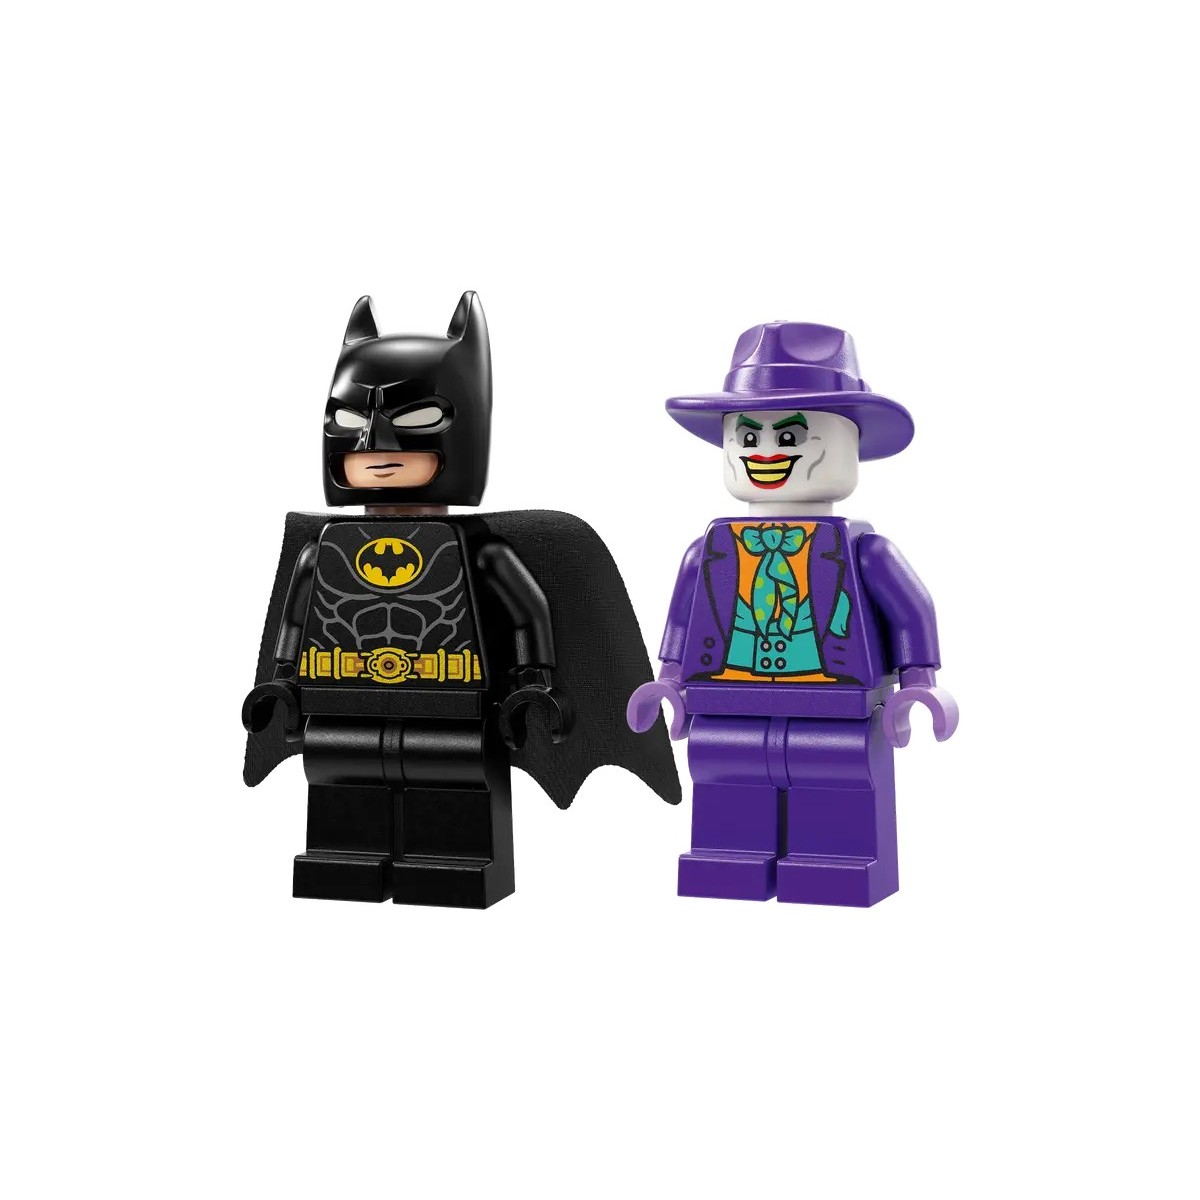 LEGO BATMAN MOVIE BATWING: BATMAN VS. JOKER /76265/ posledný kus